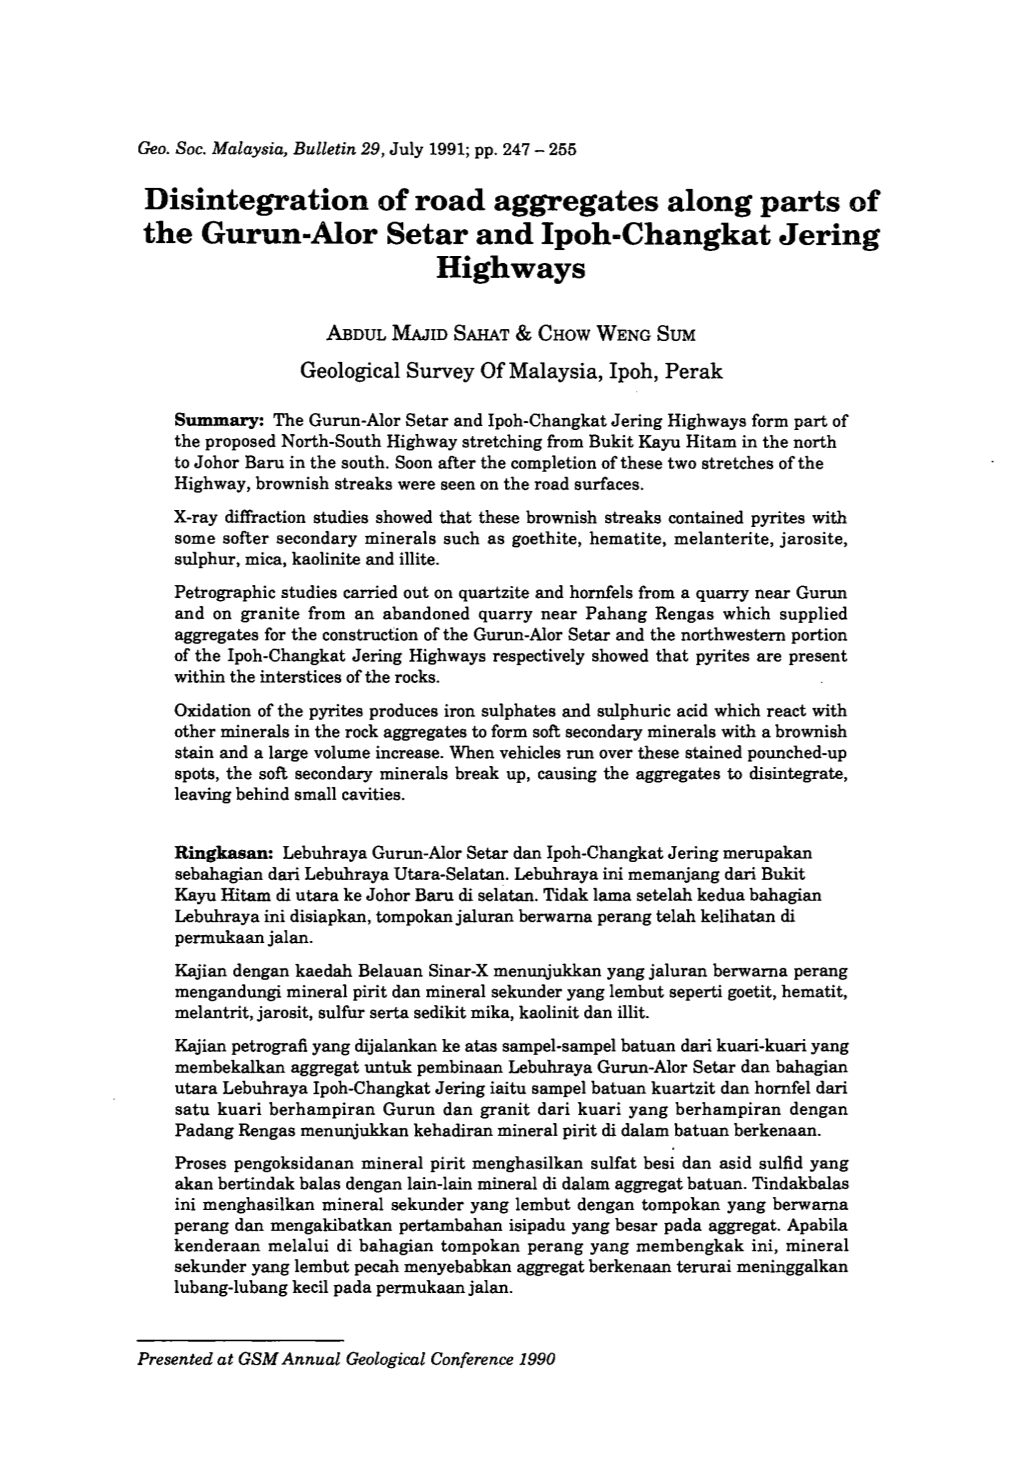 Disintegration of Road Aggregates Along Parts of the Gurun-Alor Setar and Ipoh-Changkat Jering Highways